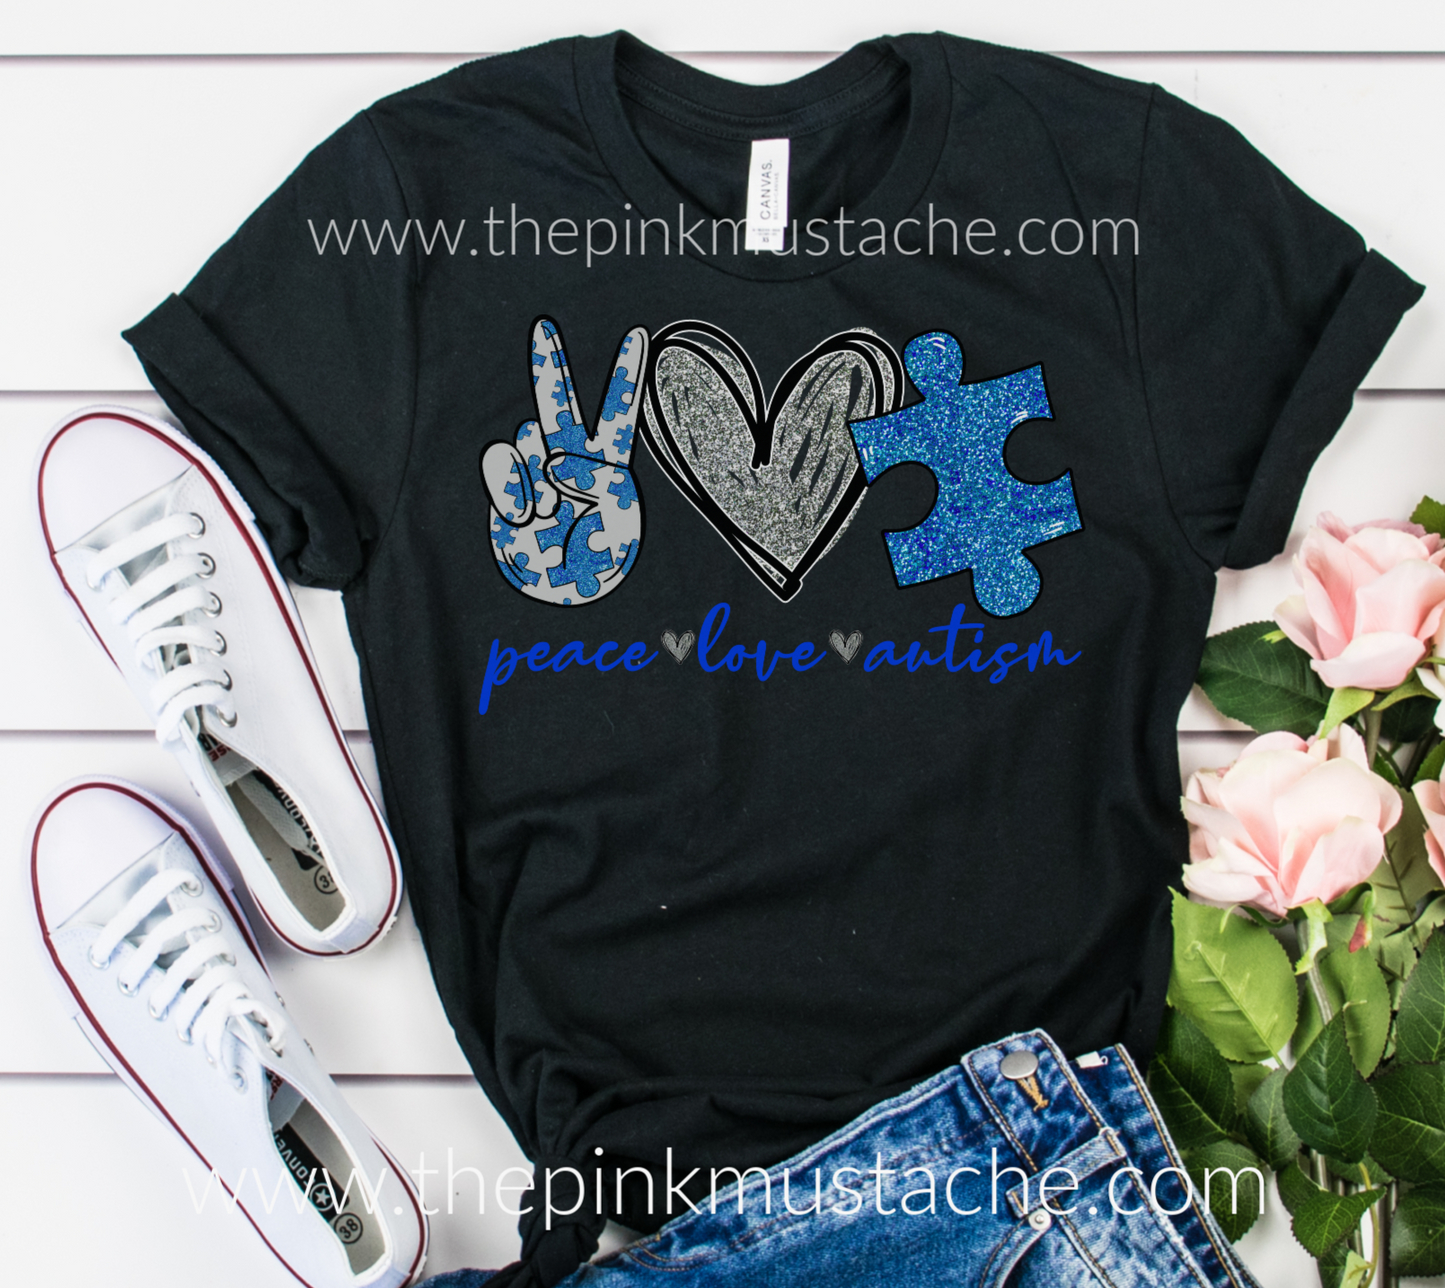 Peace Love Autism Tee / Unisex Sized Autism Awareness T-Shirt